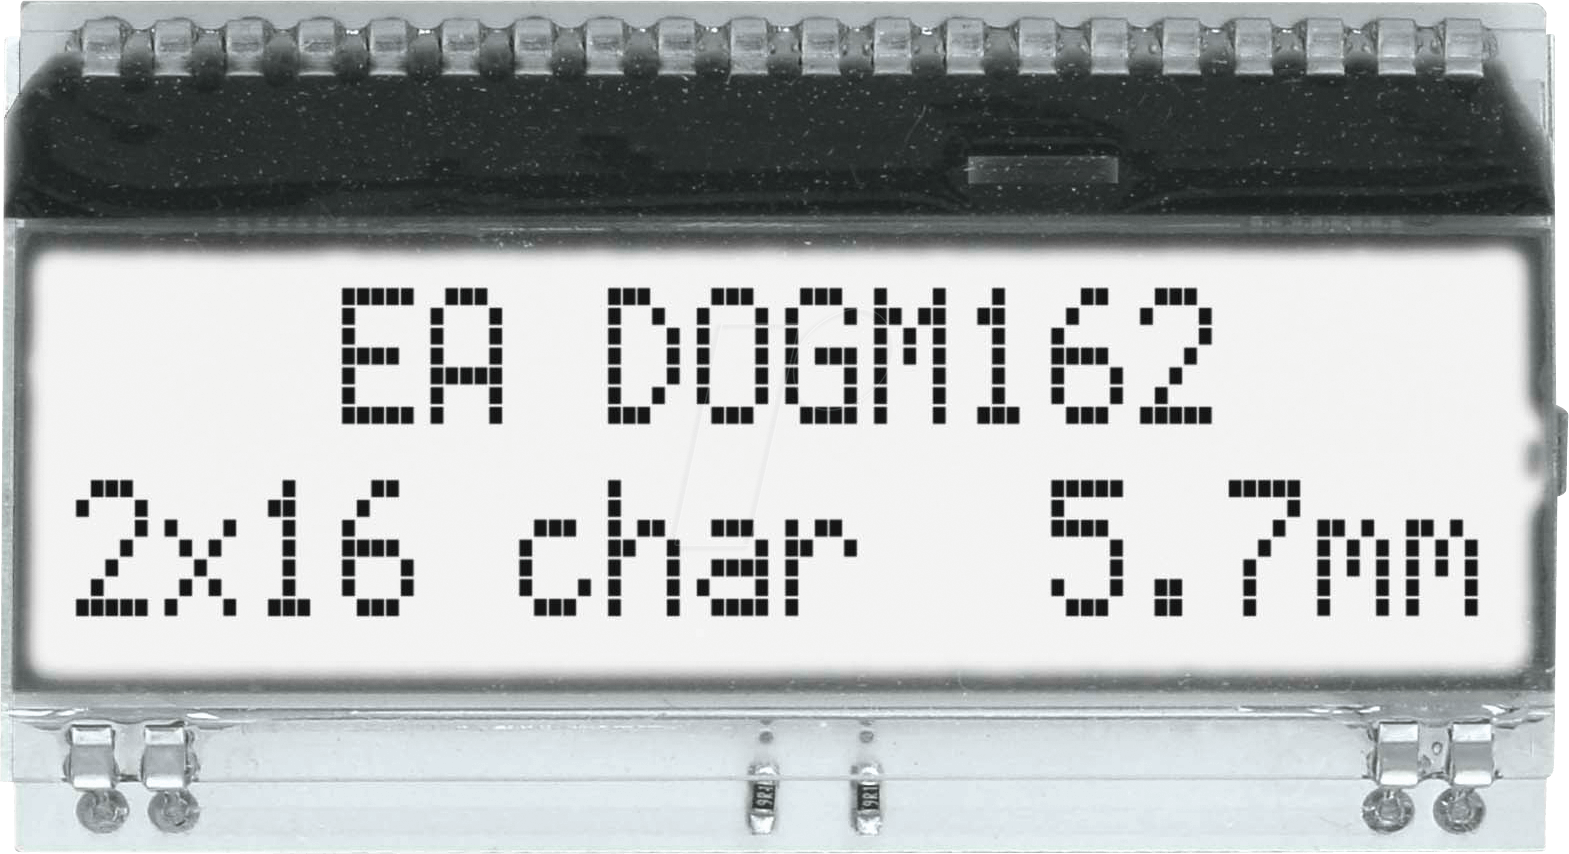 EA DOGM162W-A - LCD-Textmodul, 48,3 x 12 mm, weiß von DISPLAY VISIONS